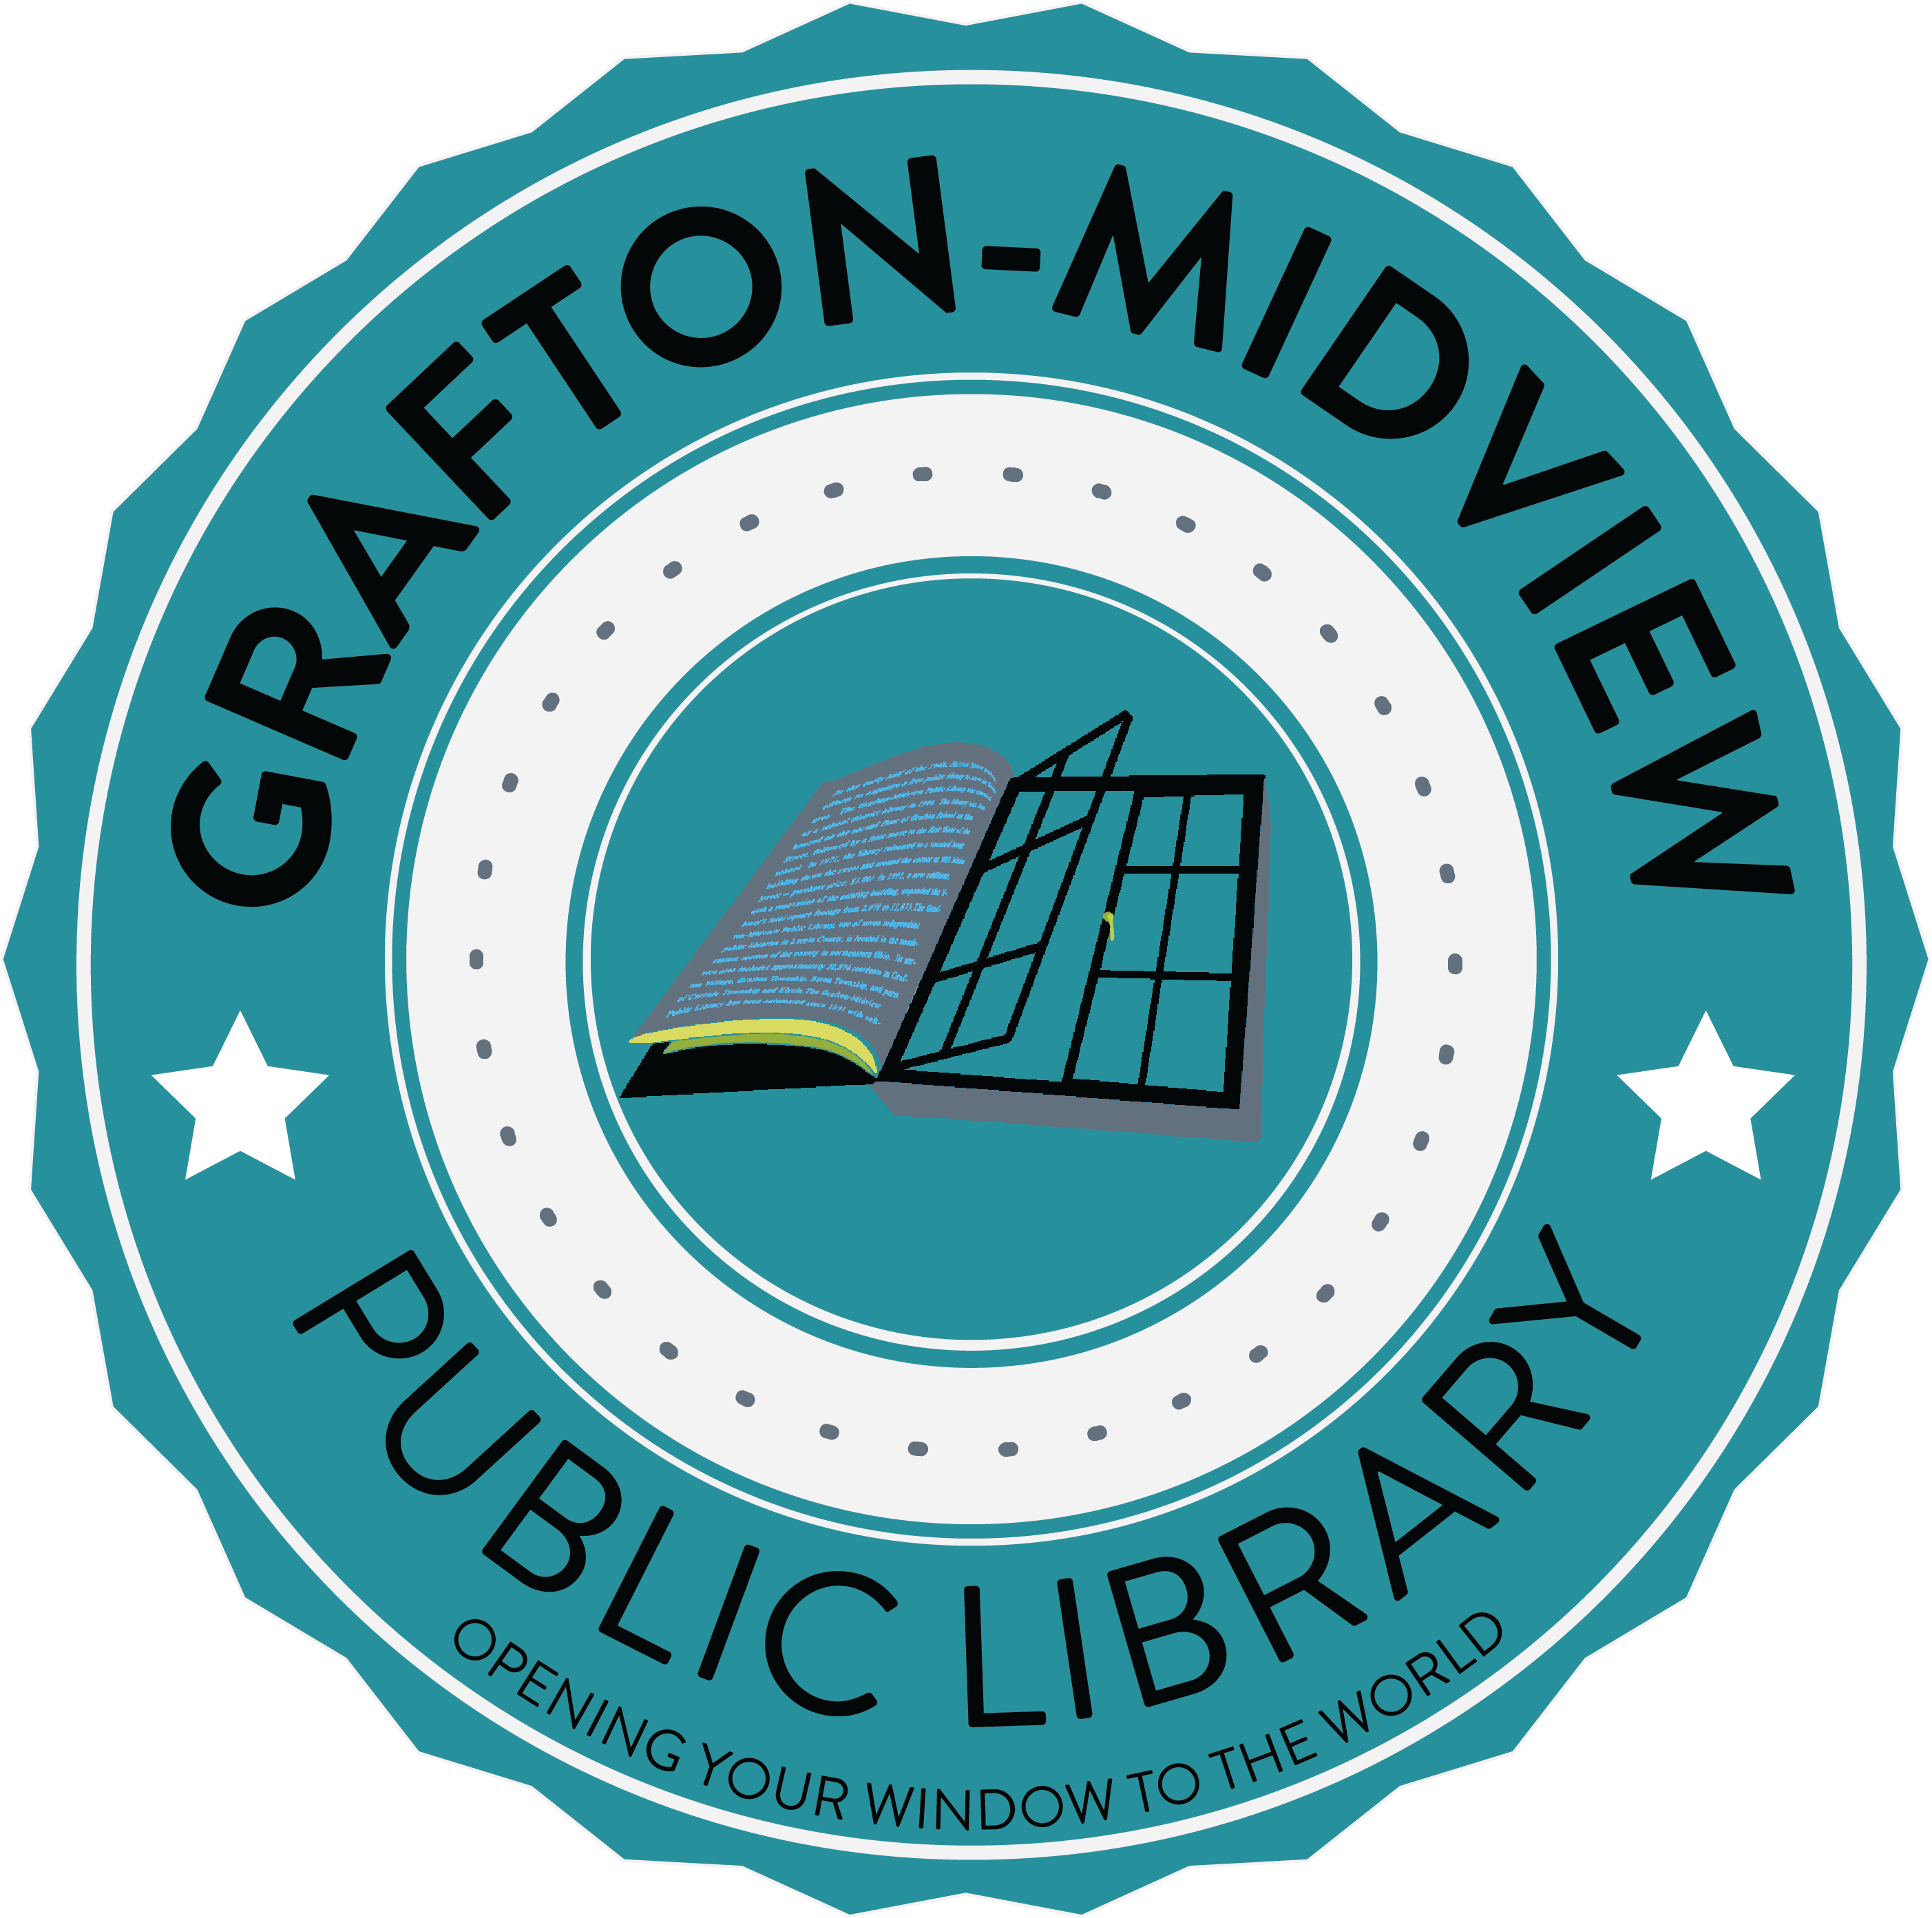 Grafton-Midview Public Library logo